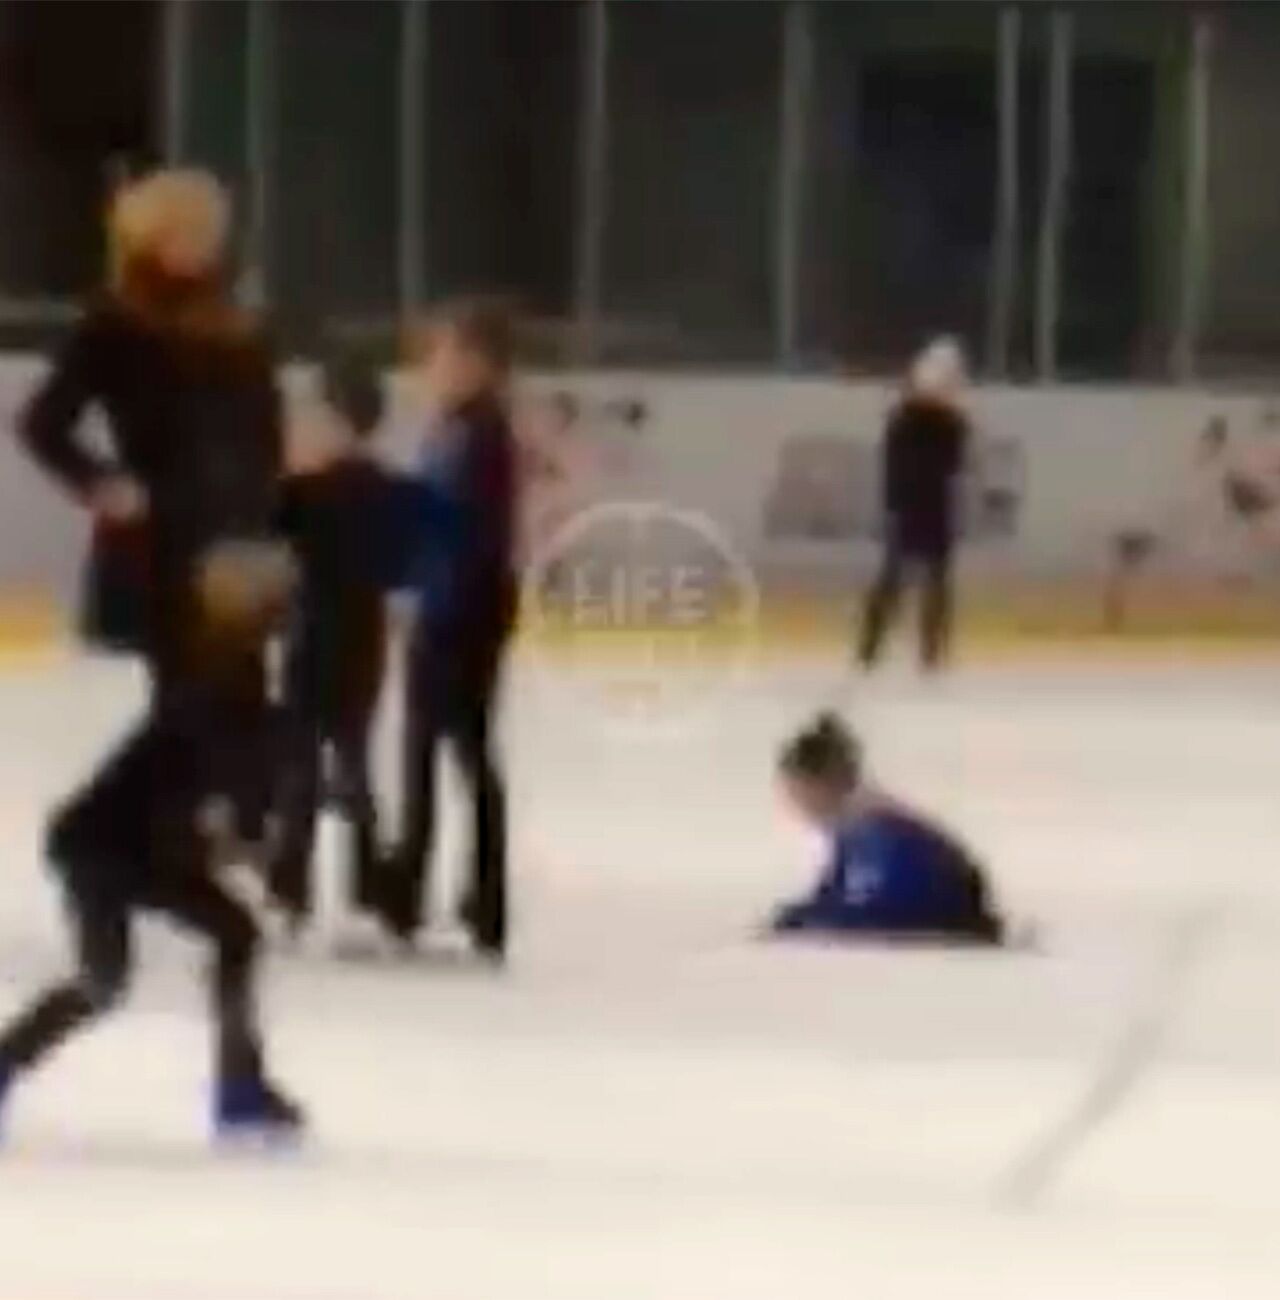 Умерла тренер по фигурному катанию. Ребенок и тренер на льду. Тренер швырнул ребенка на лед видео.